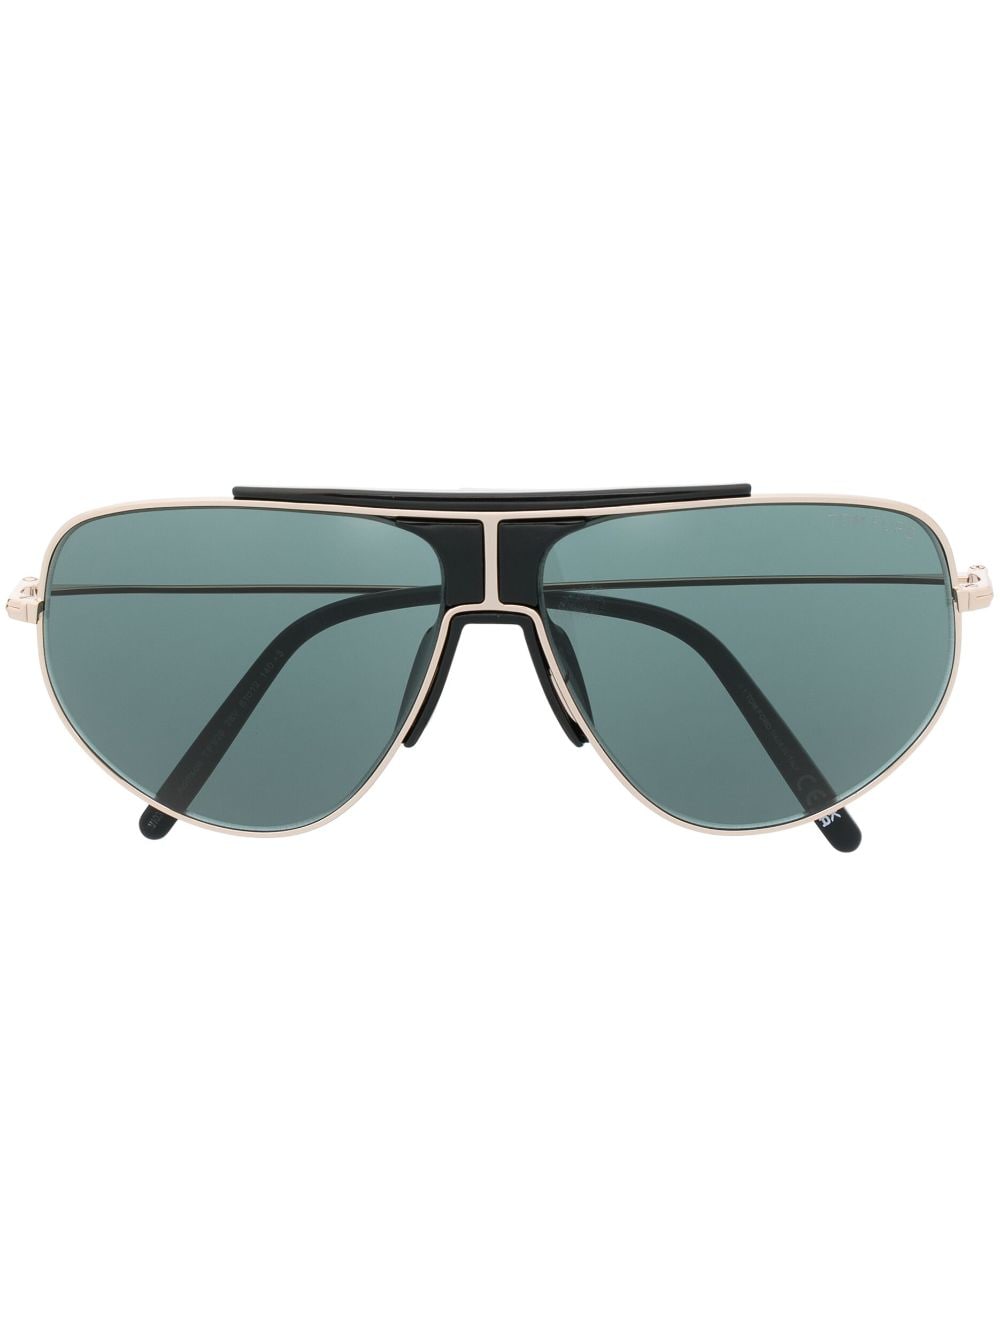 TOM FORD Eyewear Aviator frame sunglasses - Gold von TOM FORD Eyewear